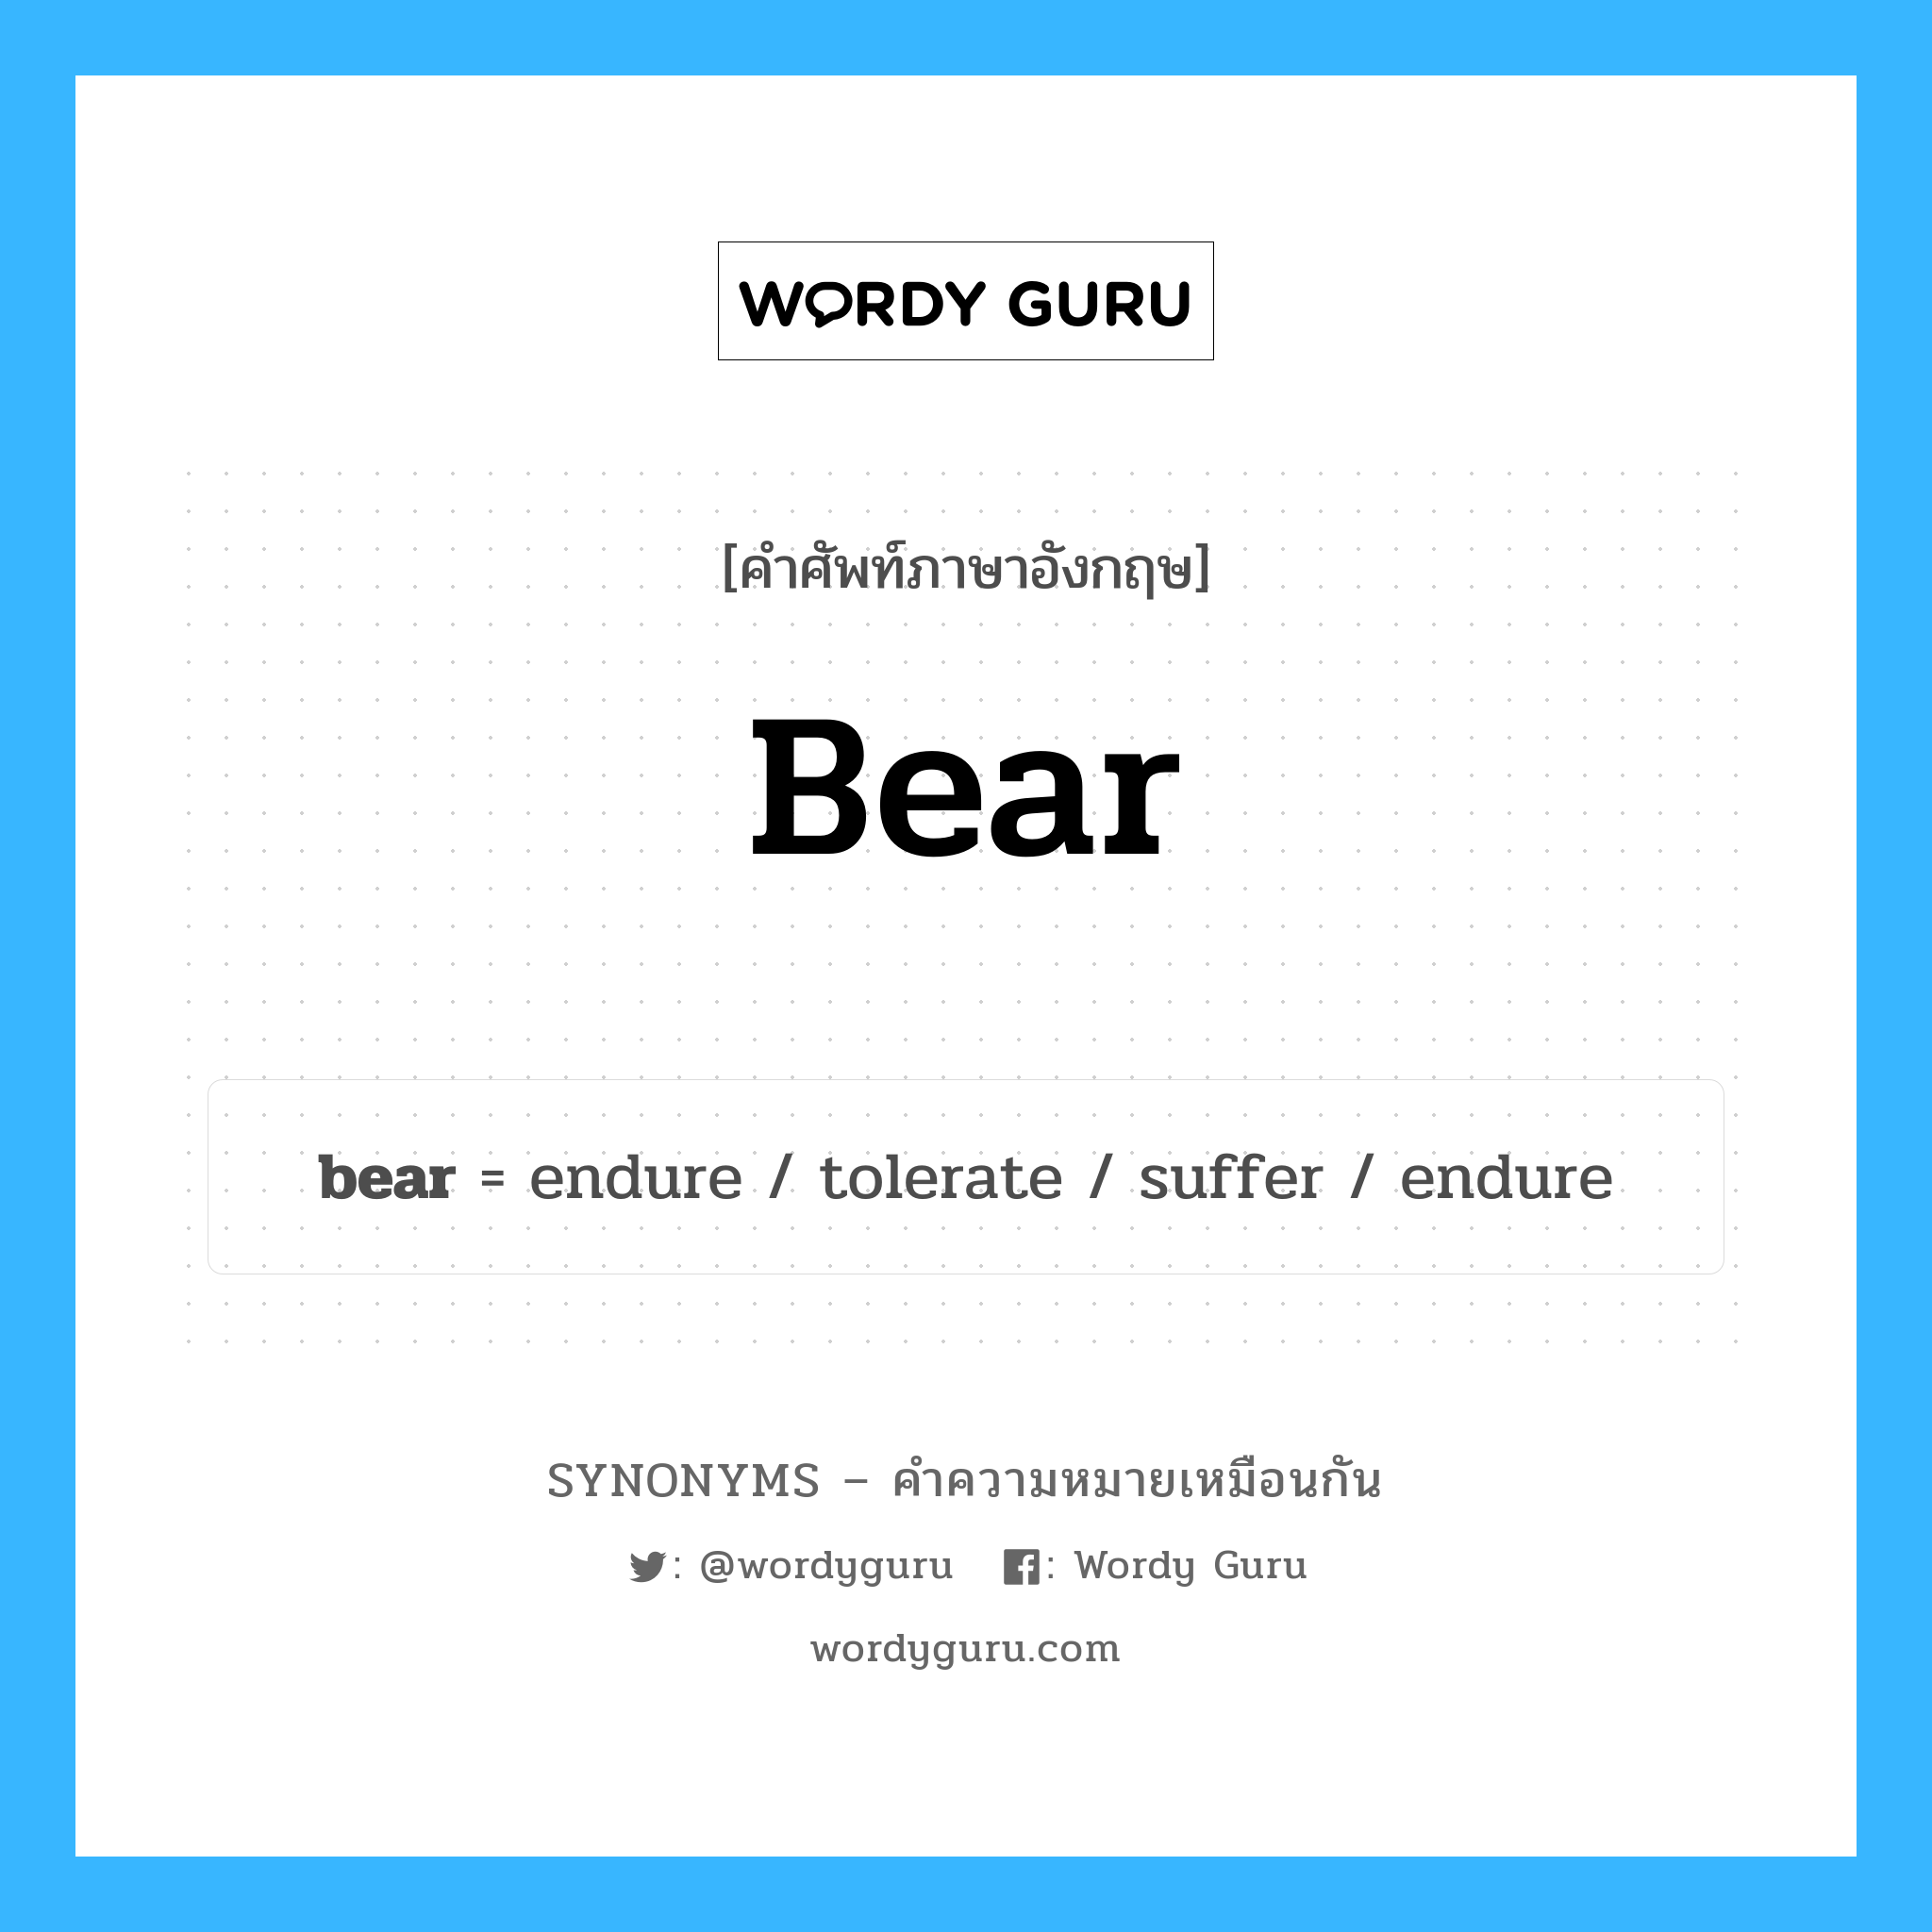 suffer เป็นหนึ่งใน bear และมีคำอื่น ๆ อีกดังนี้, คำศัพท์ภาษาอังกฤษ suffer ความหมายคล้ายกันกับ bear แปลว่า ต้องทนทุกข์ทรมาน หมวด bear